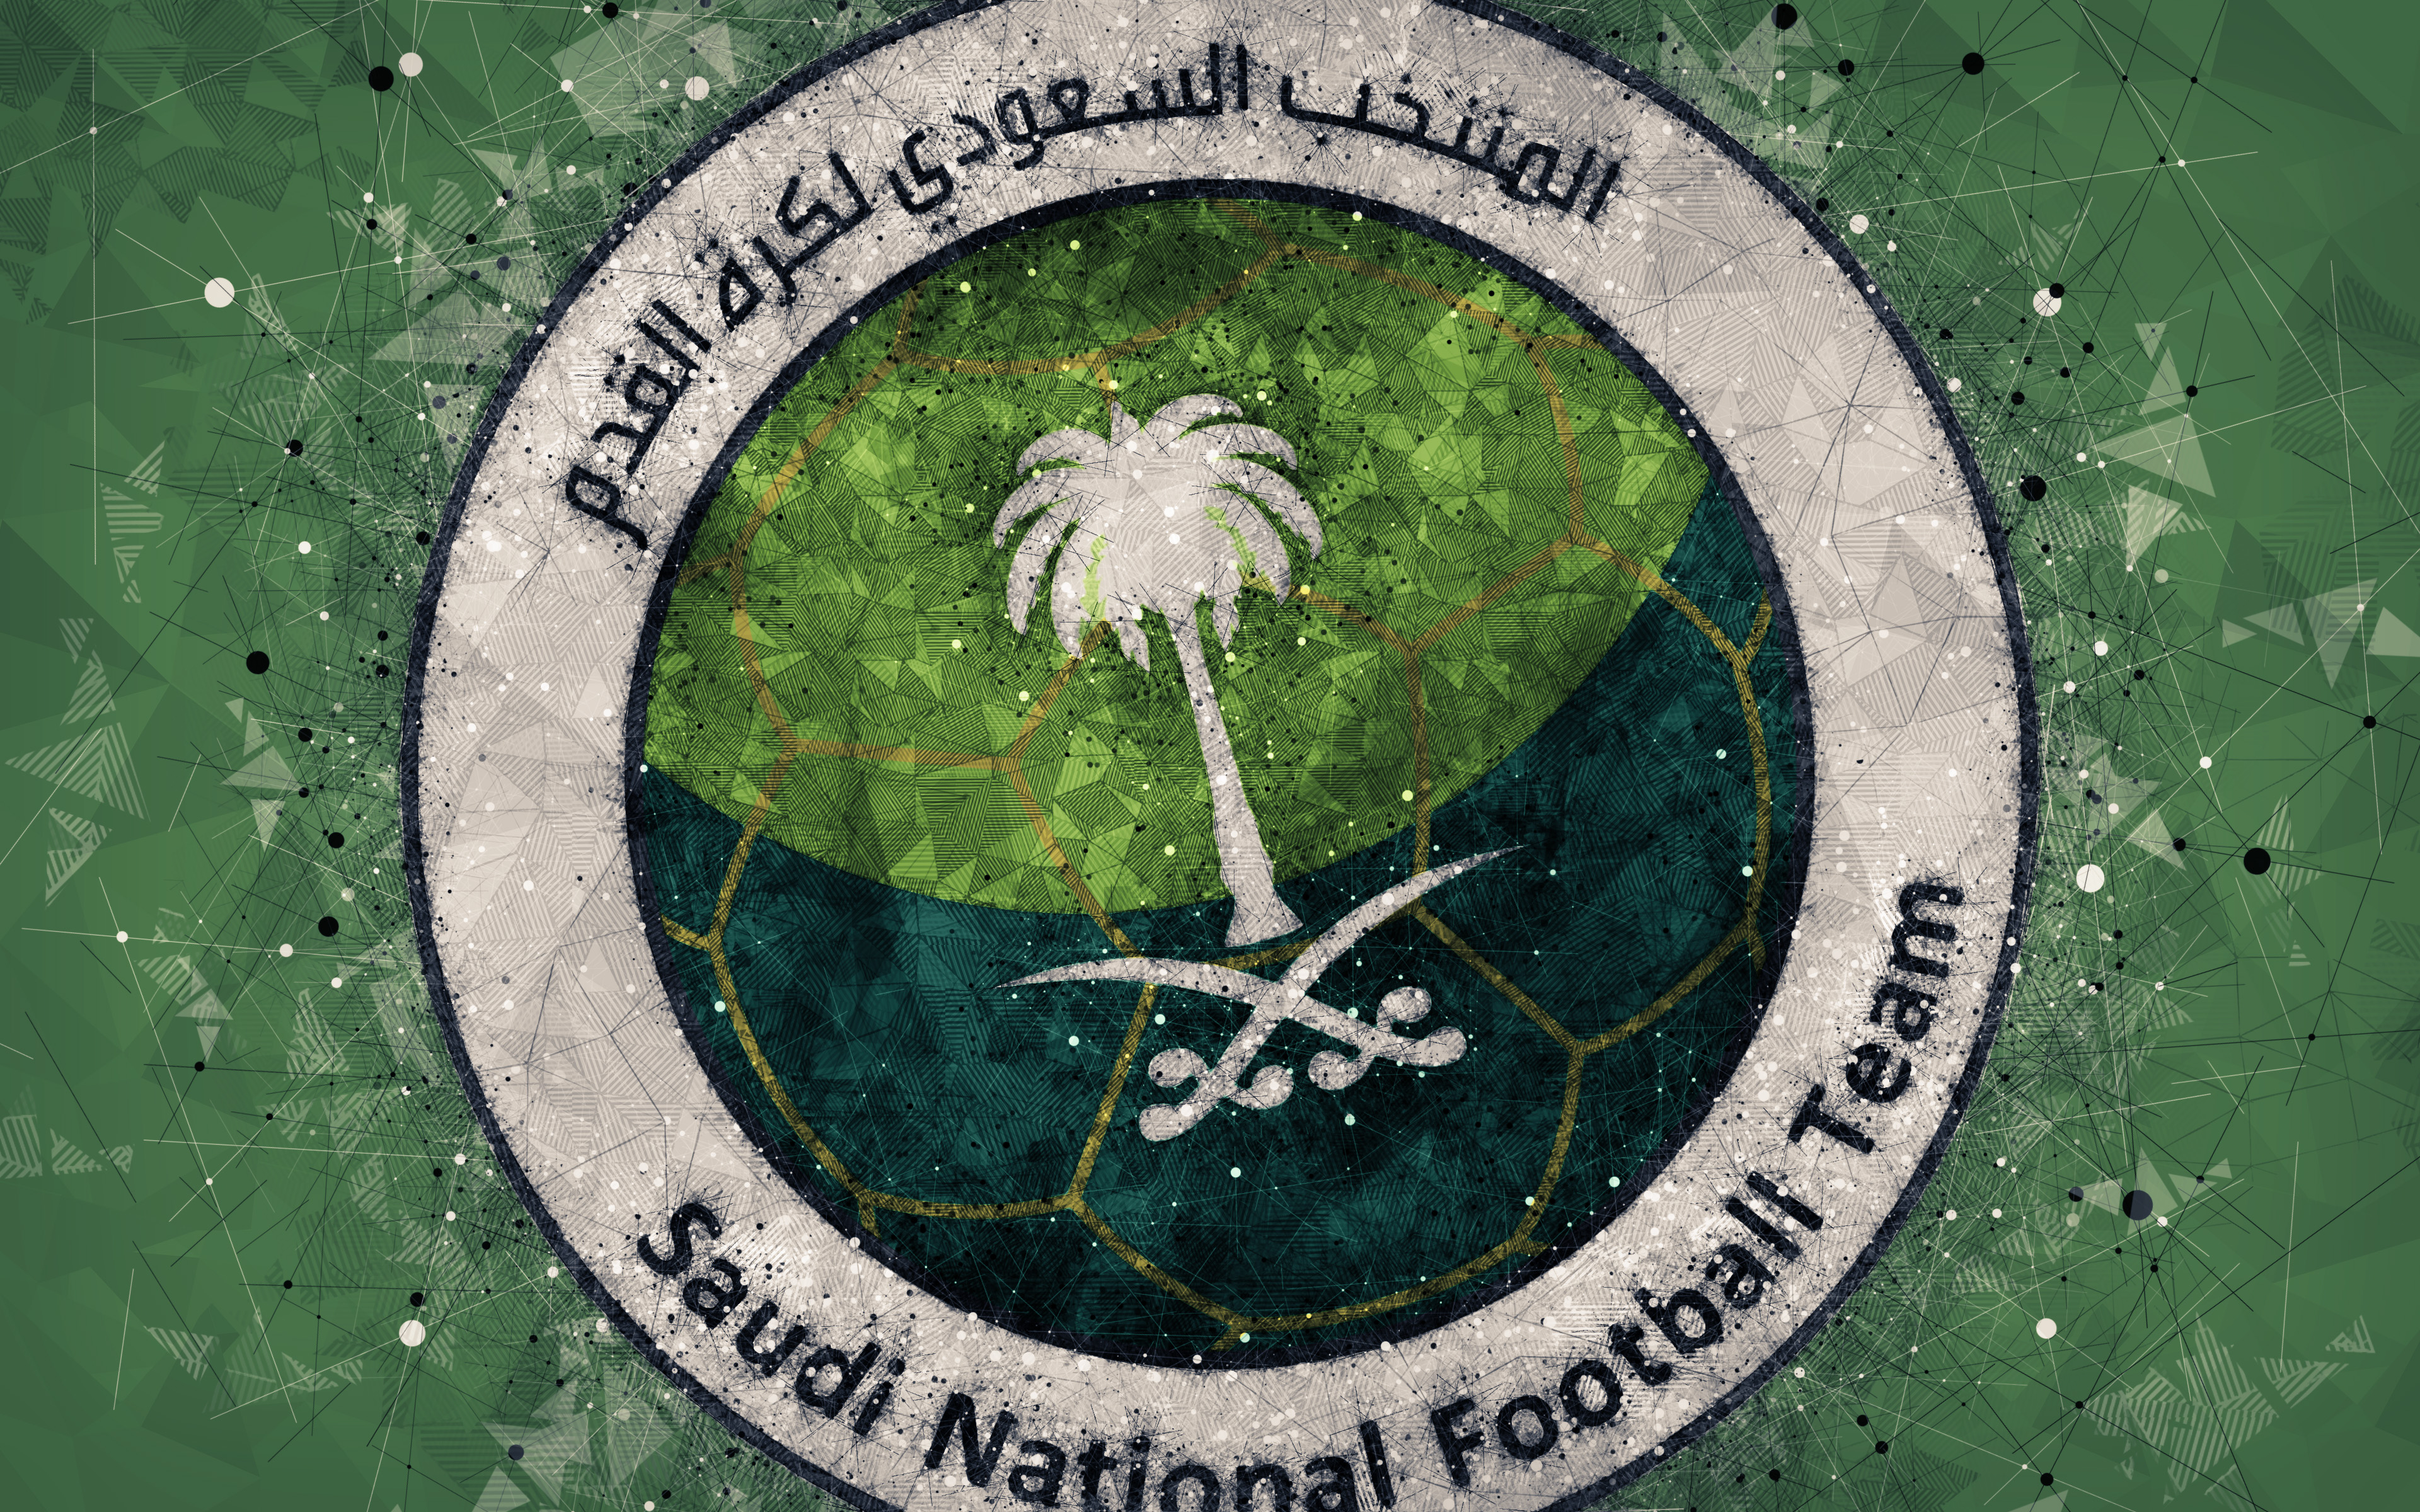 Sports Saudi Arabia National Football Team HD Wallpaper | Background Image